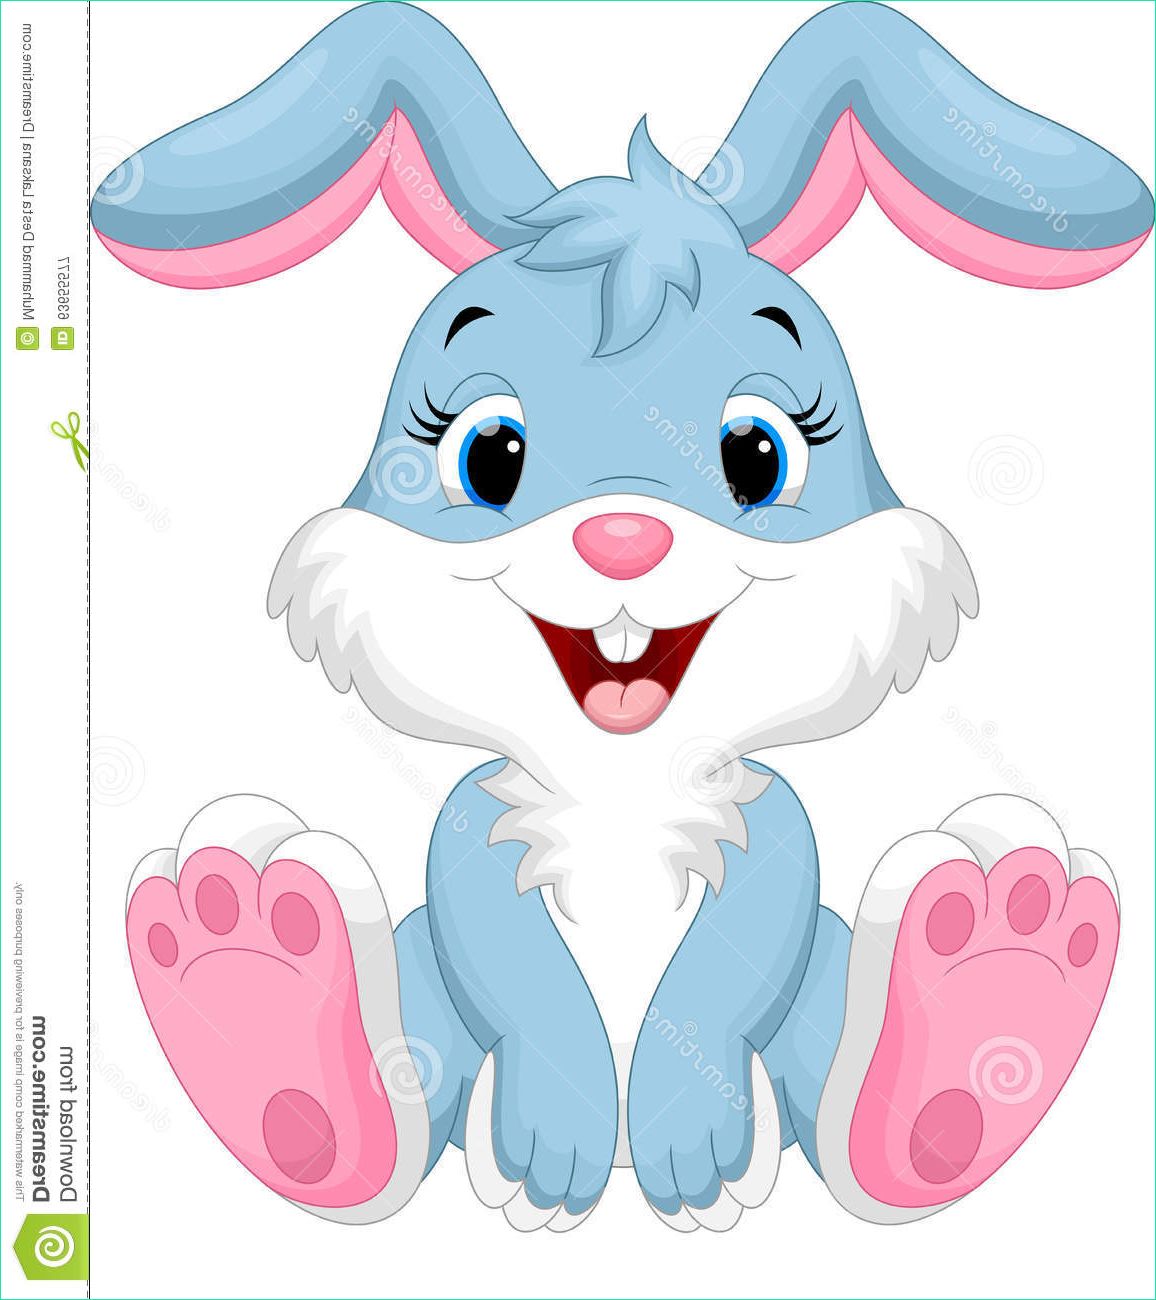 illustration stock dessin animé mignon de lapin image